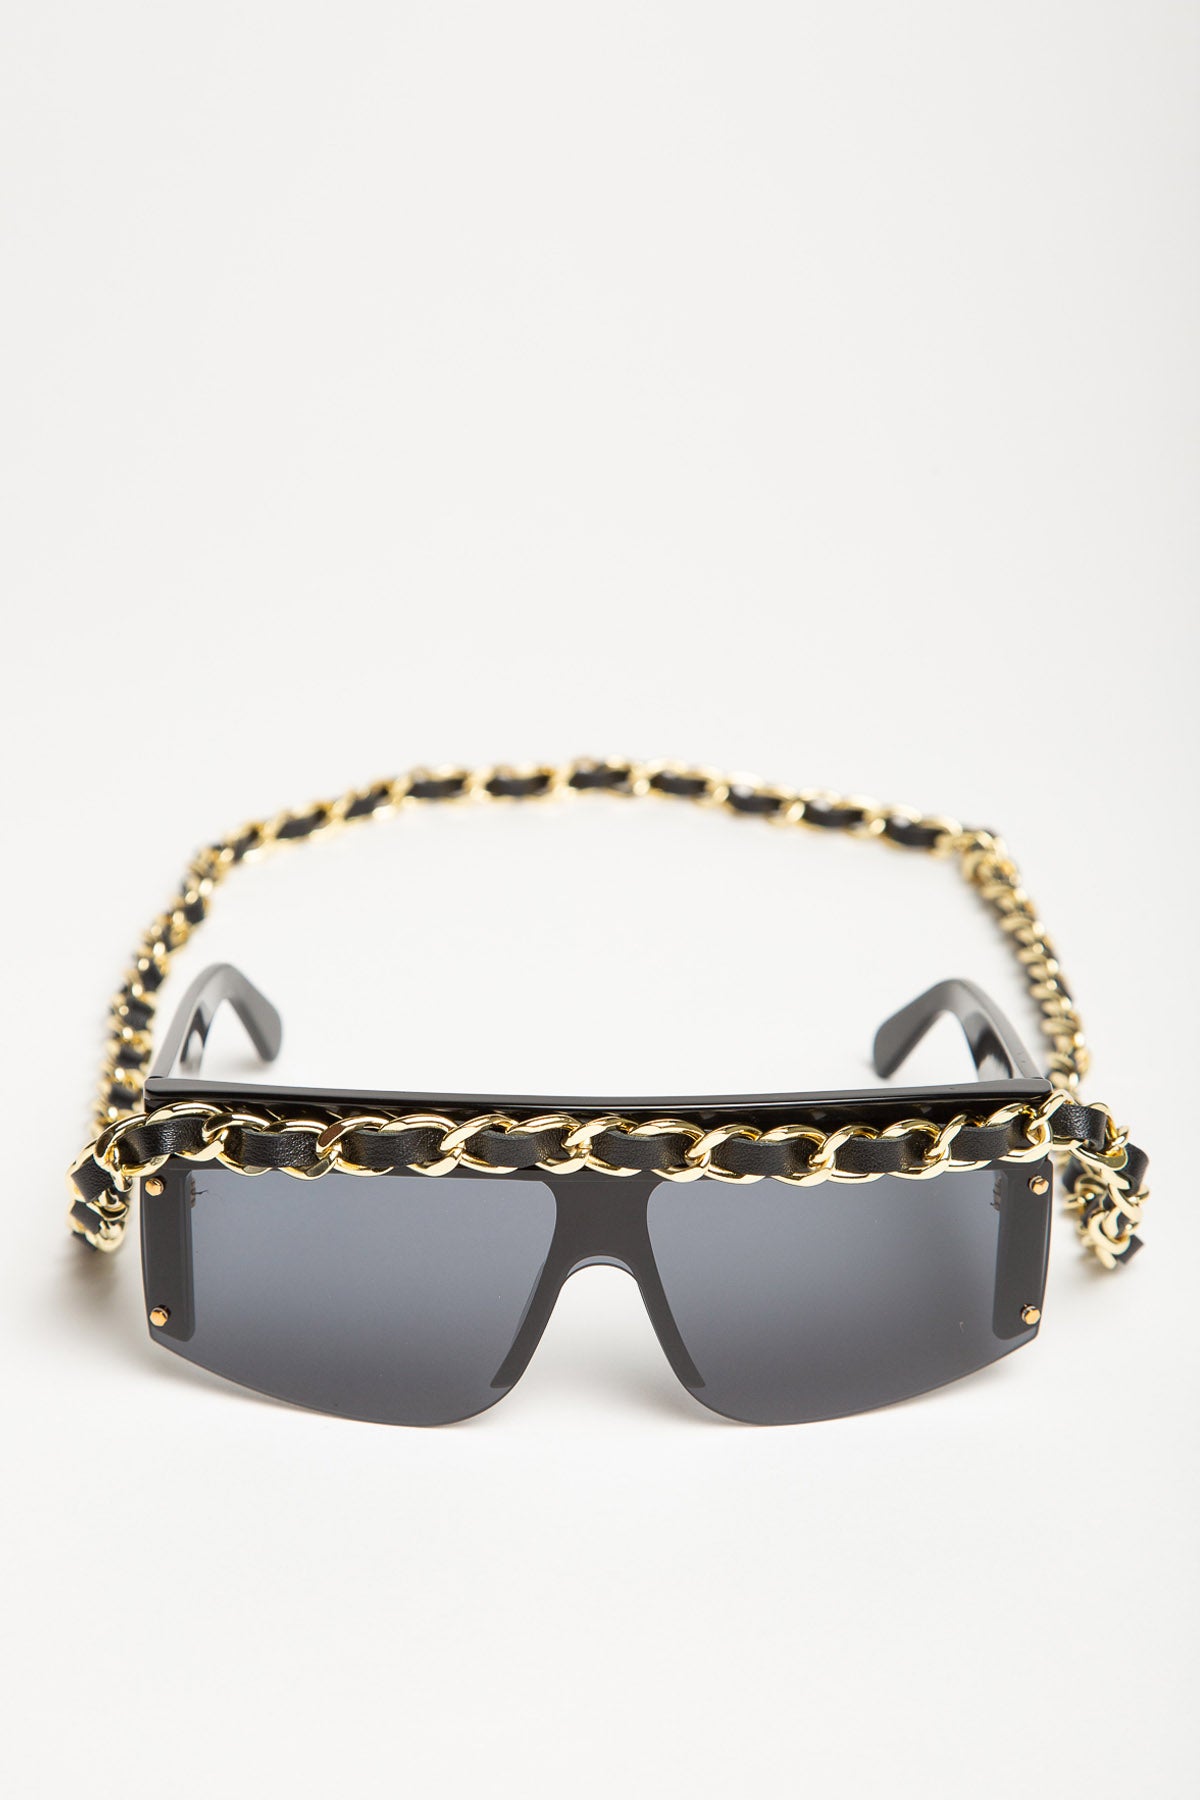 Vintage Chanel | 1992 Chanel Sunglasses